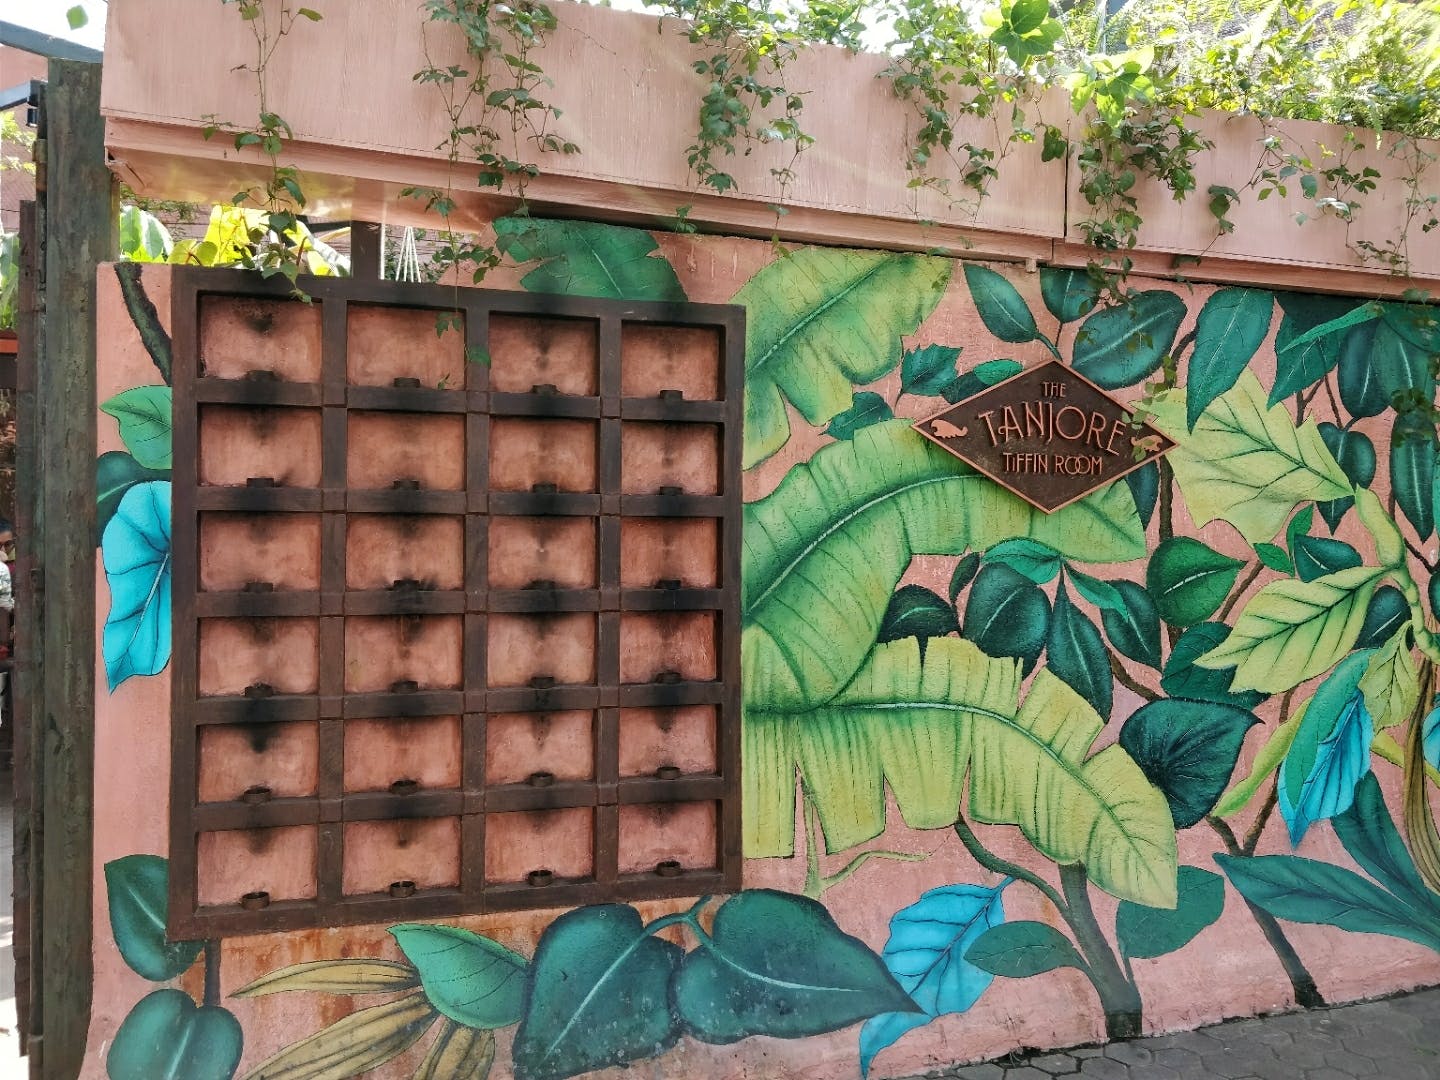 Leaf,Wall,Mural,Plant,Facade,Art,Street art,House